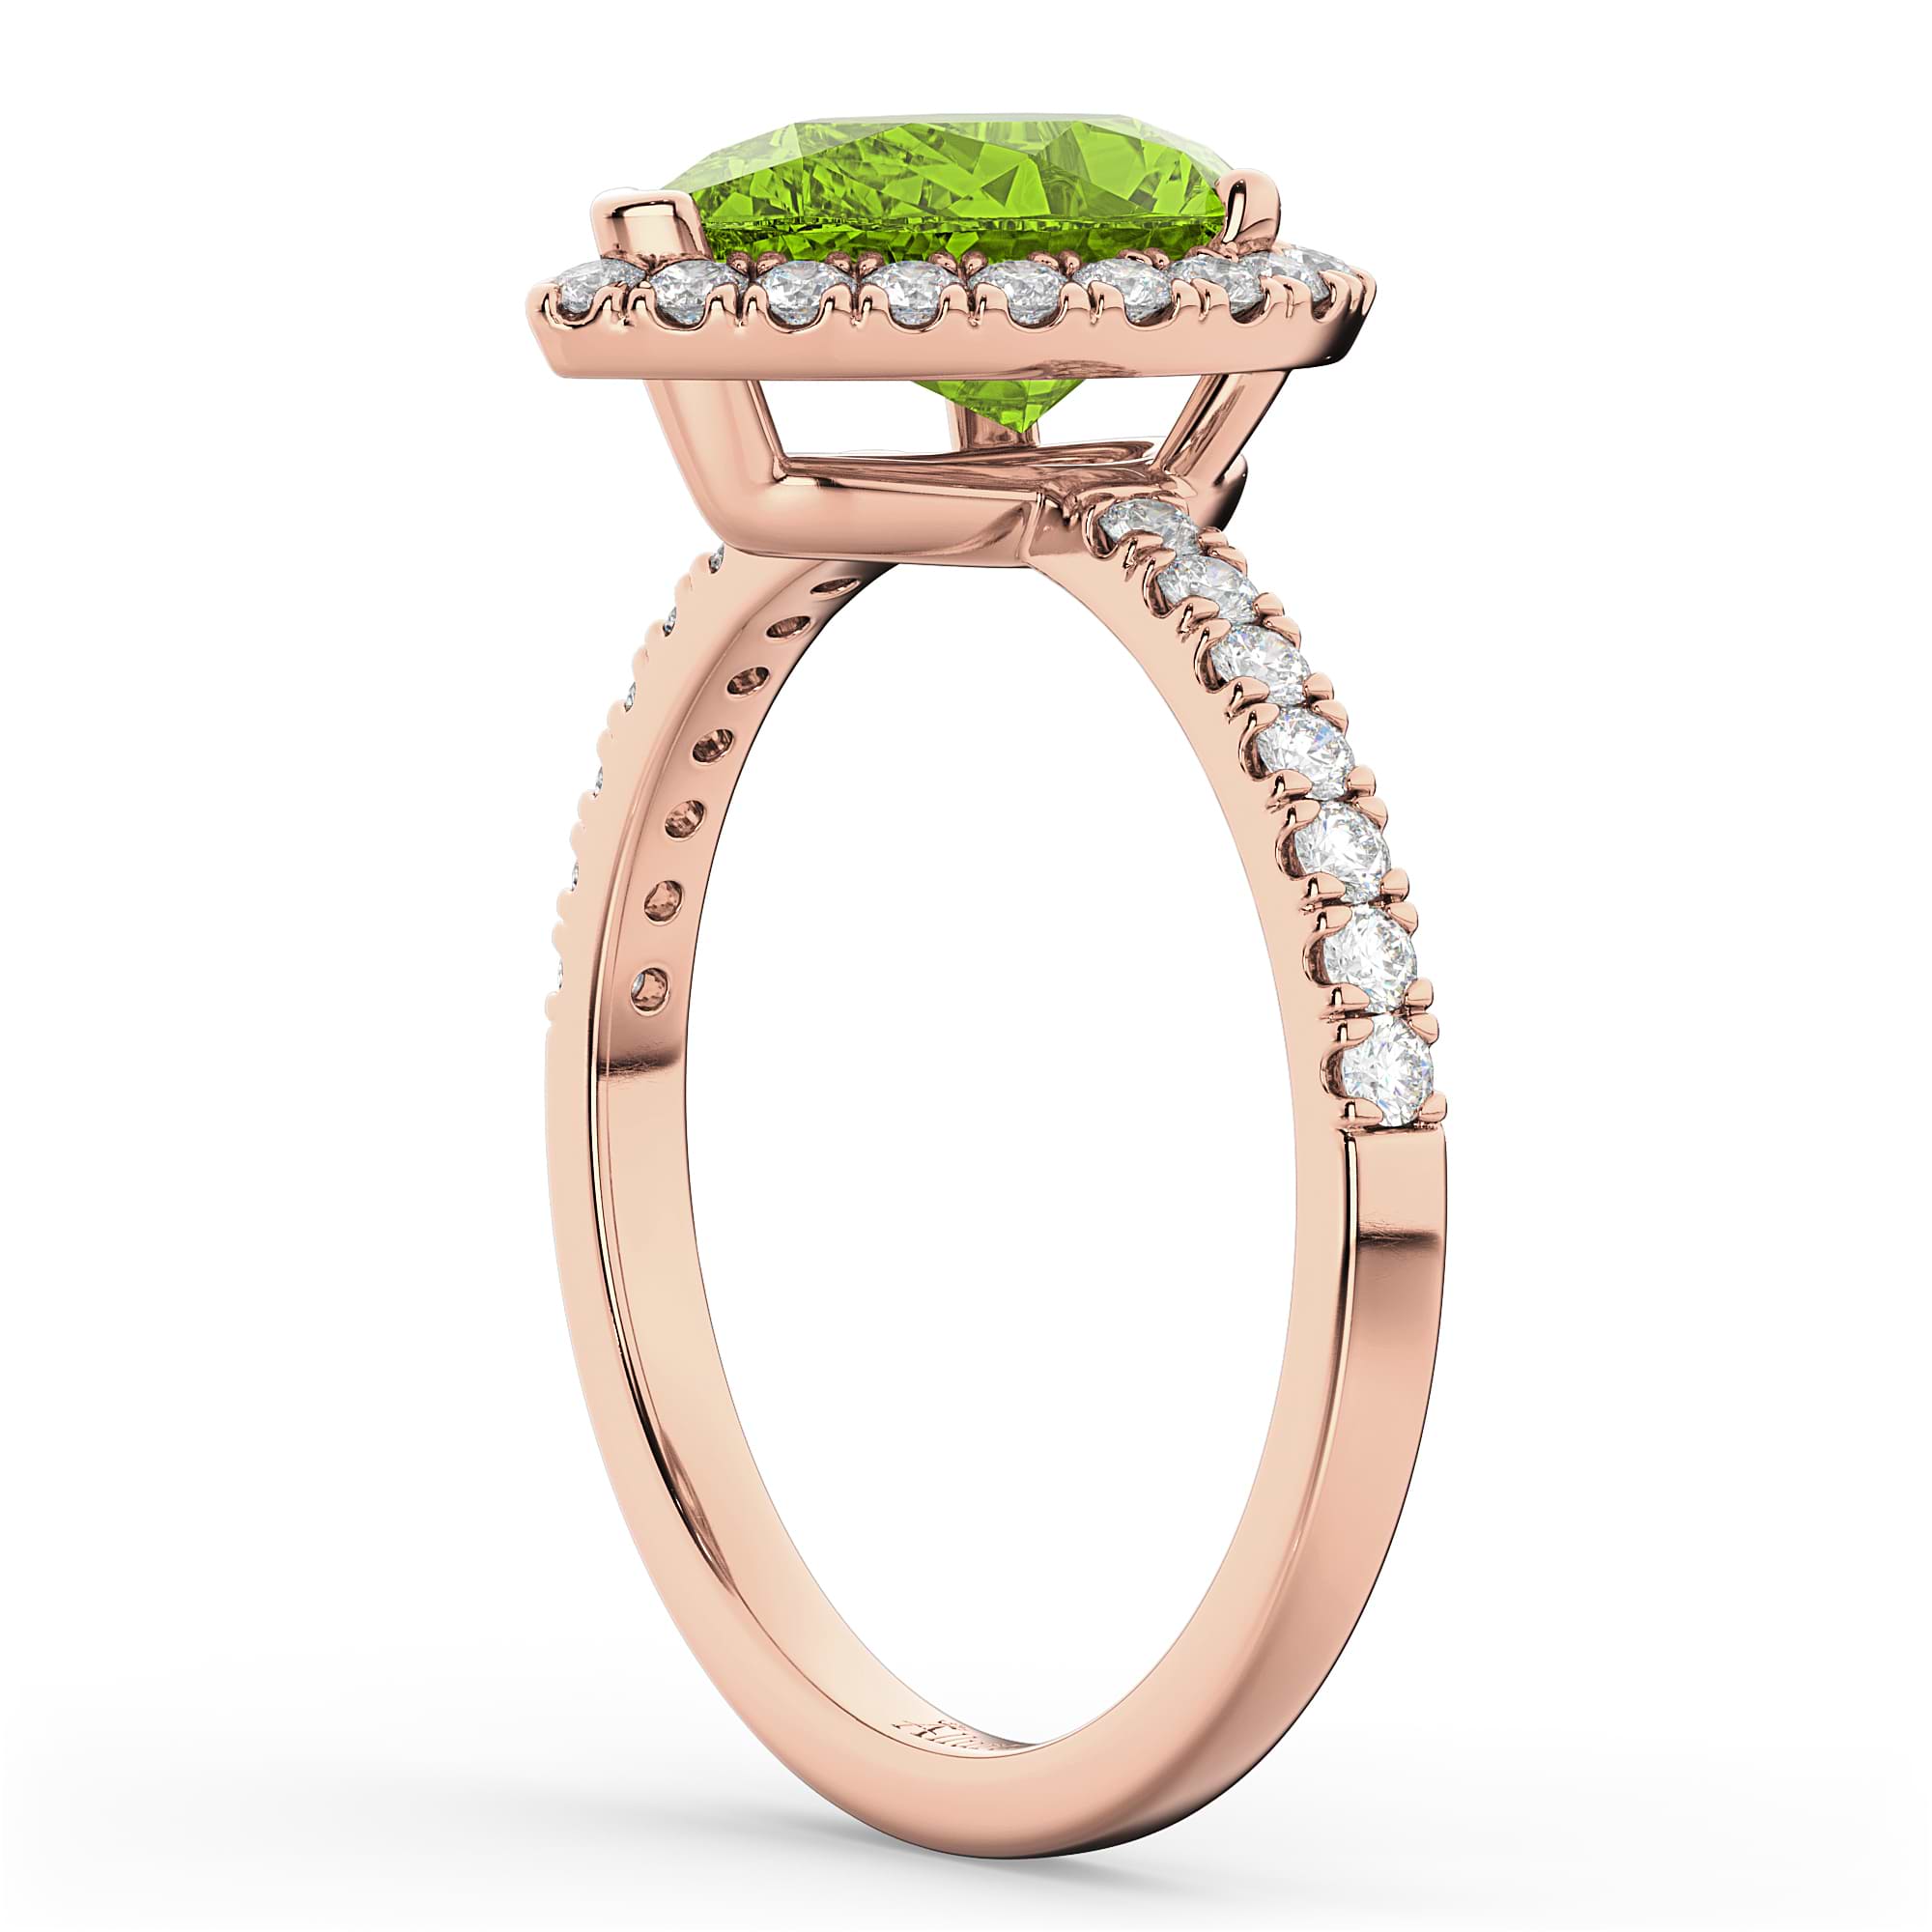 Pear Cut Halo Peridot & Diamond Engagement Ring 14K Rose Gold 1.91ct